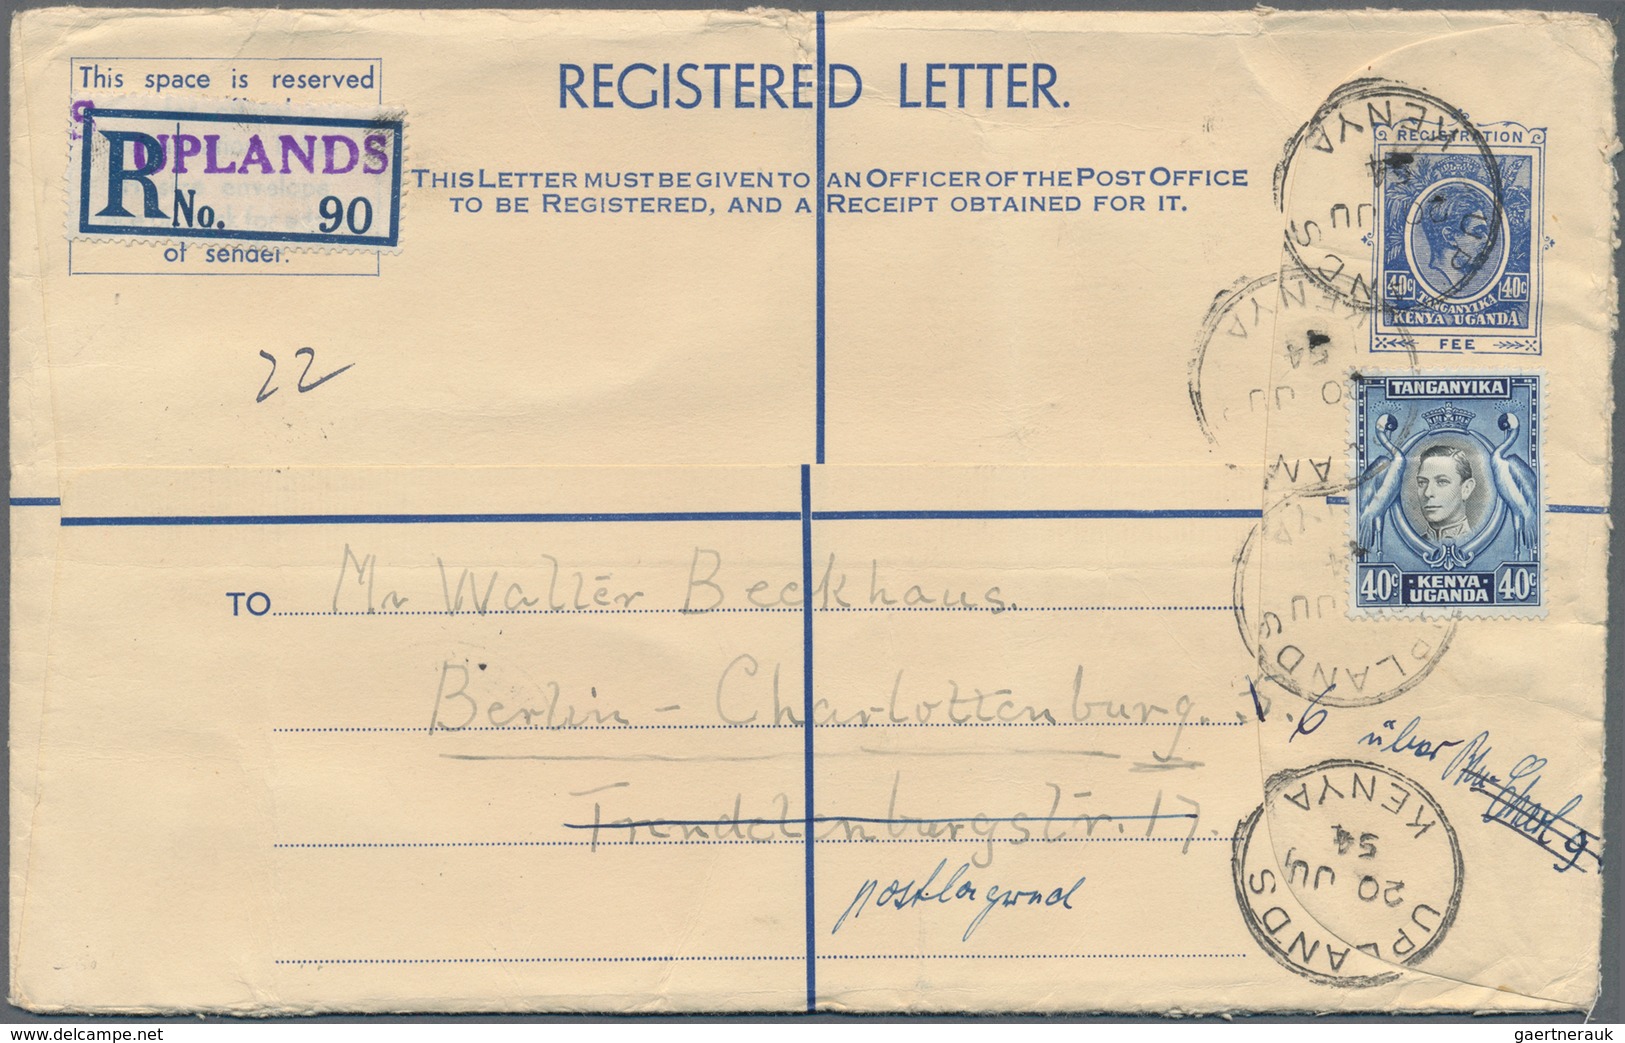 Ostafrikanische Gemeinschaft: 1954 (20.6.), Registered Letter KGVI 40c. Blue Uprated With Crowned Cr - Britisch-Ostafrika